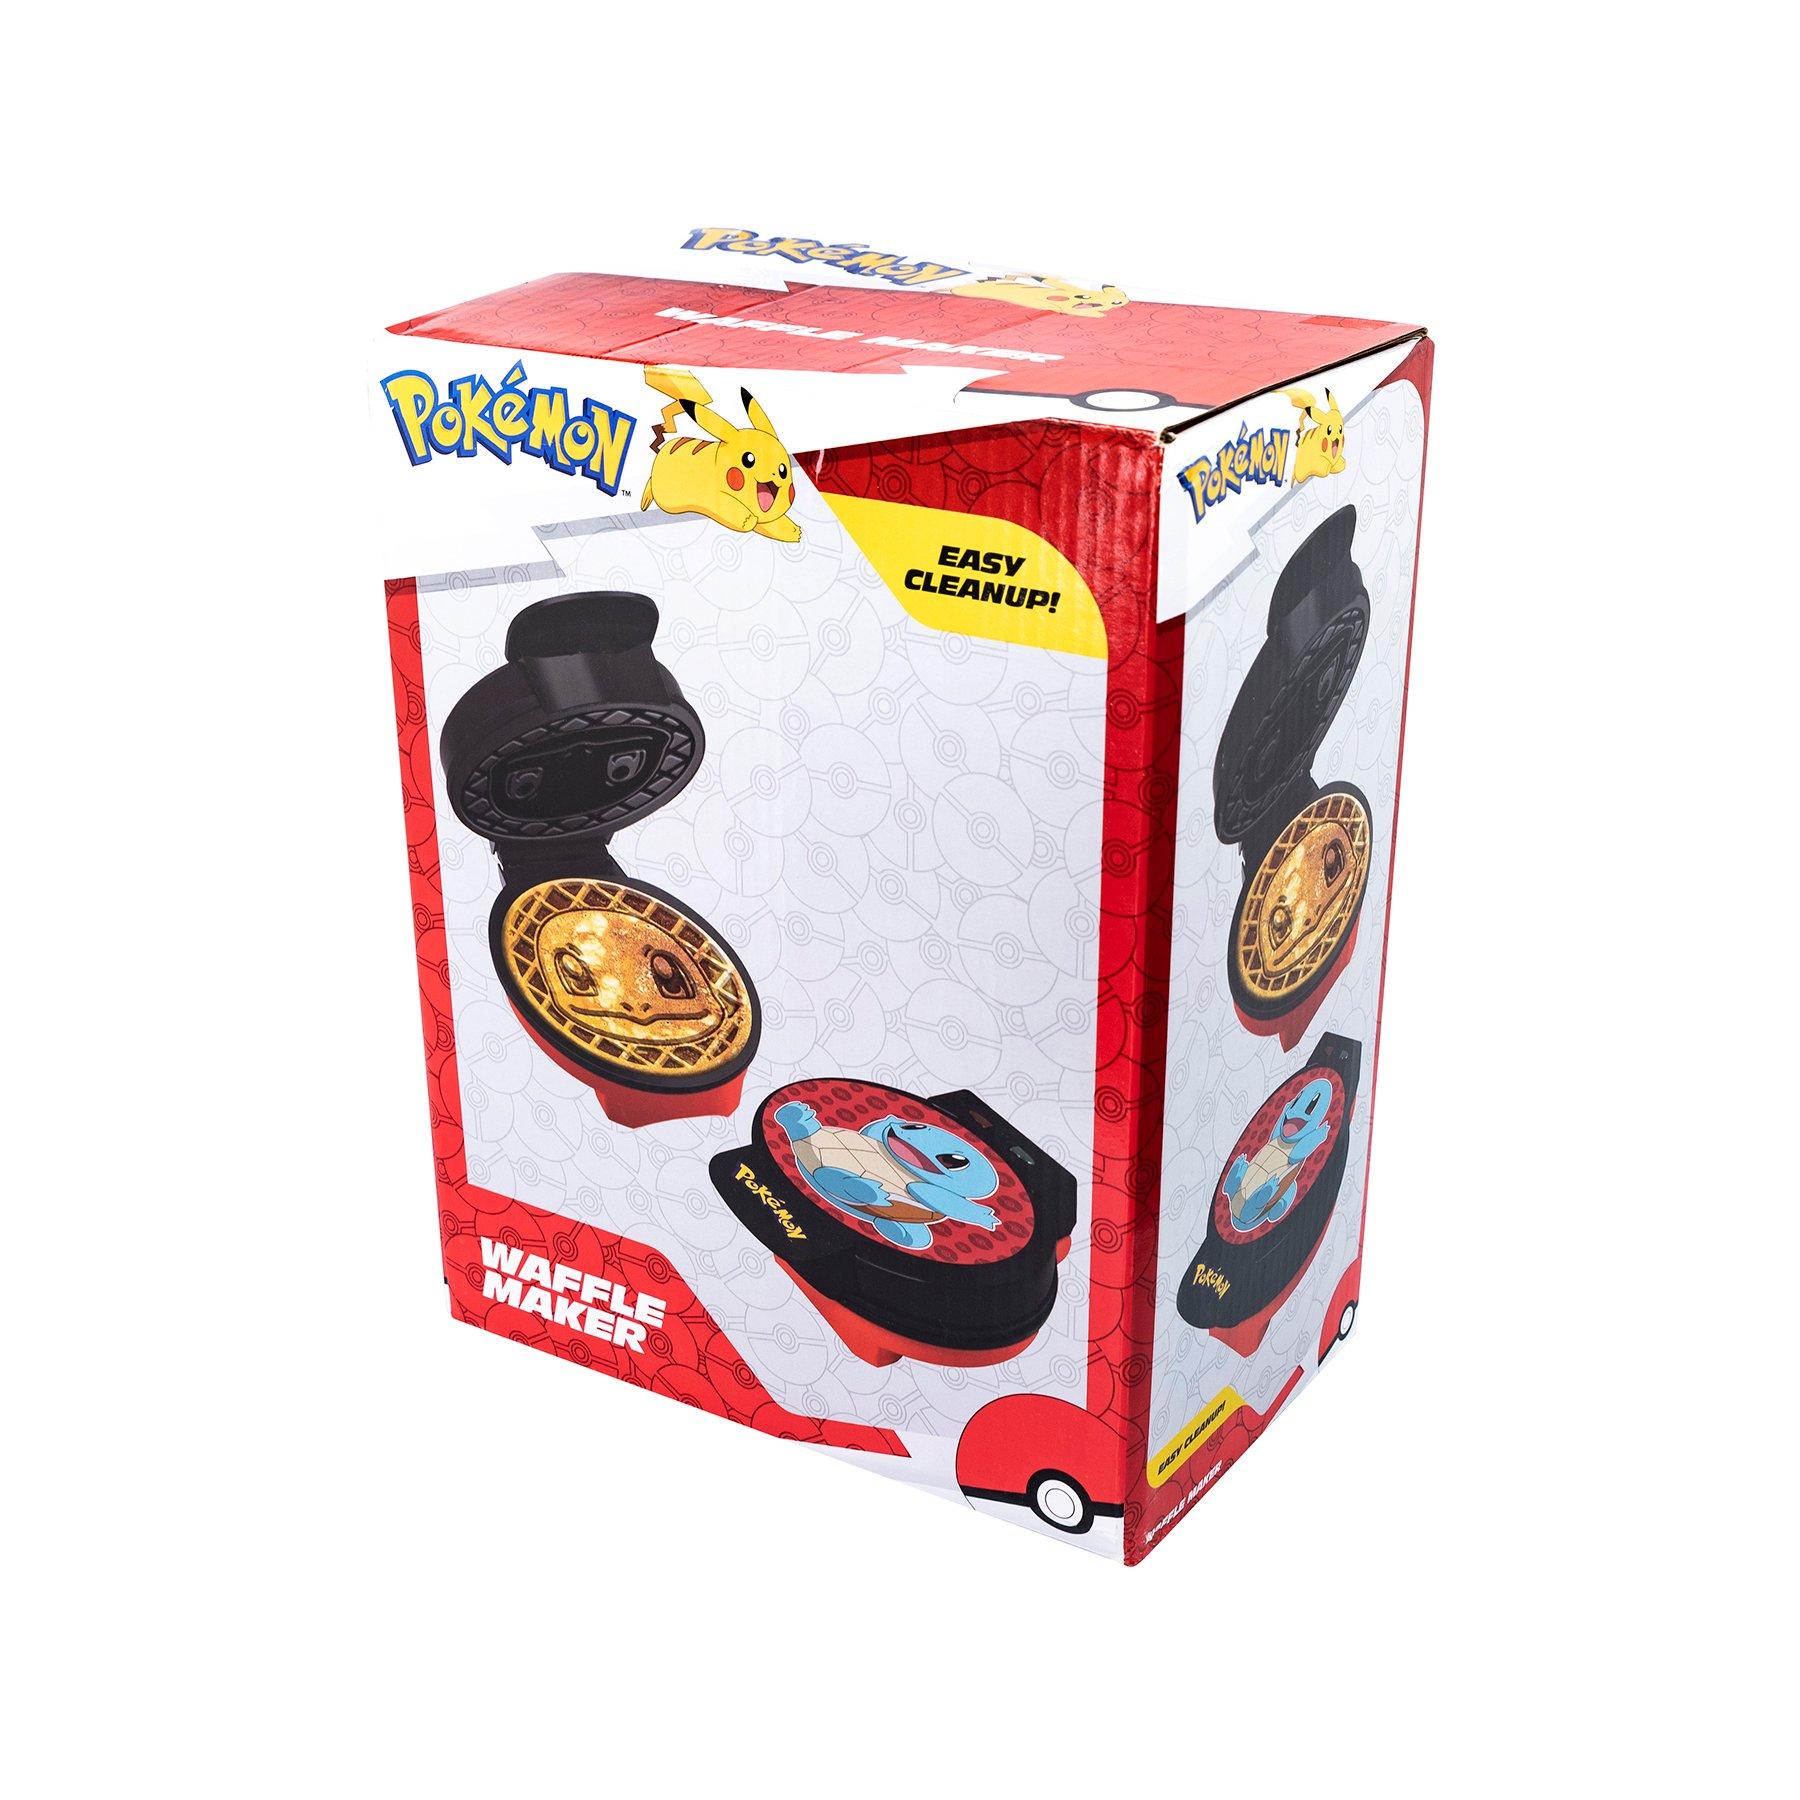 Uncanny Brands Pokemon Squirtle Mini Waffle Maker GameStop Exclusive